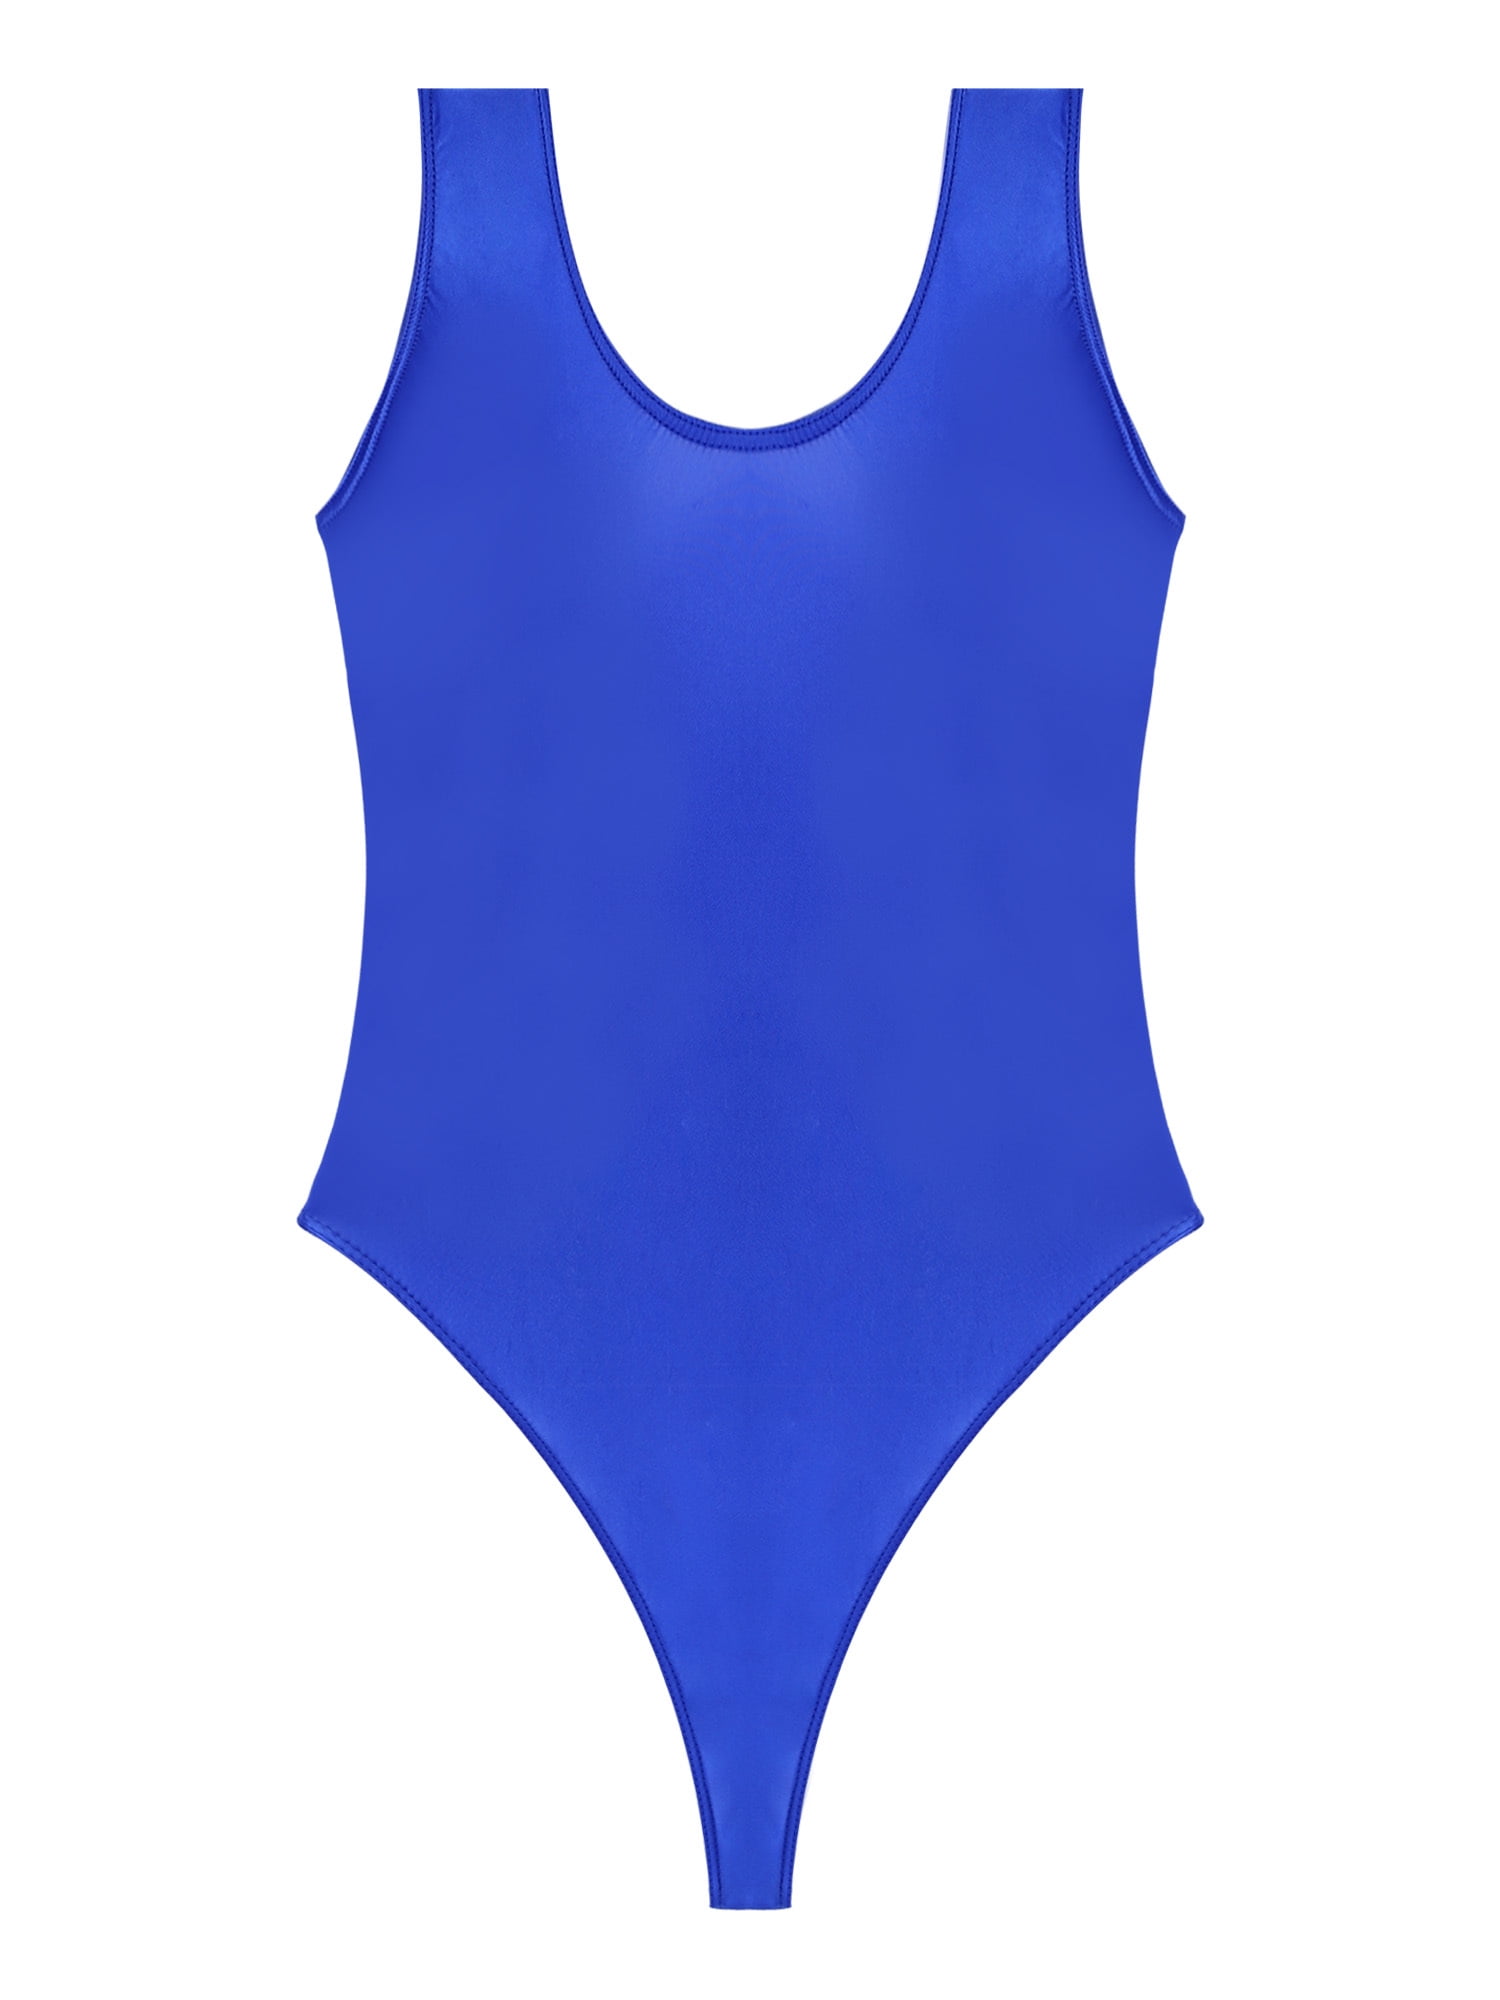 1/6 Scale Female Swimwear High Cut Leotard Backless Bodysuit * 2DBeat Hobby  Store